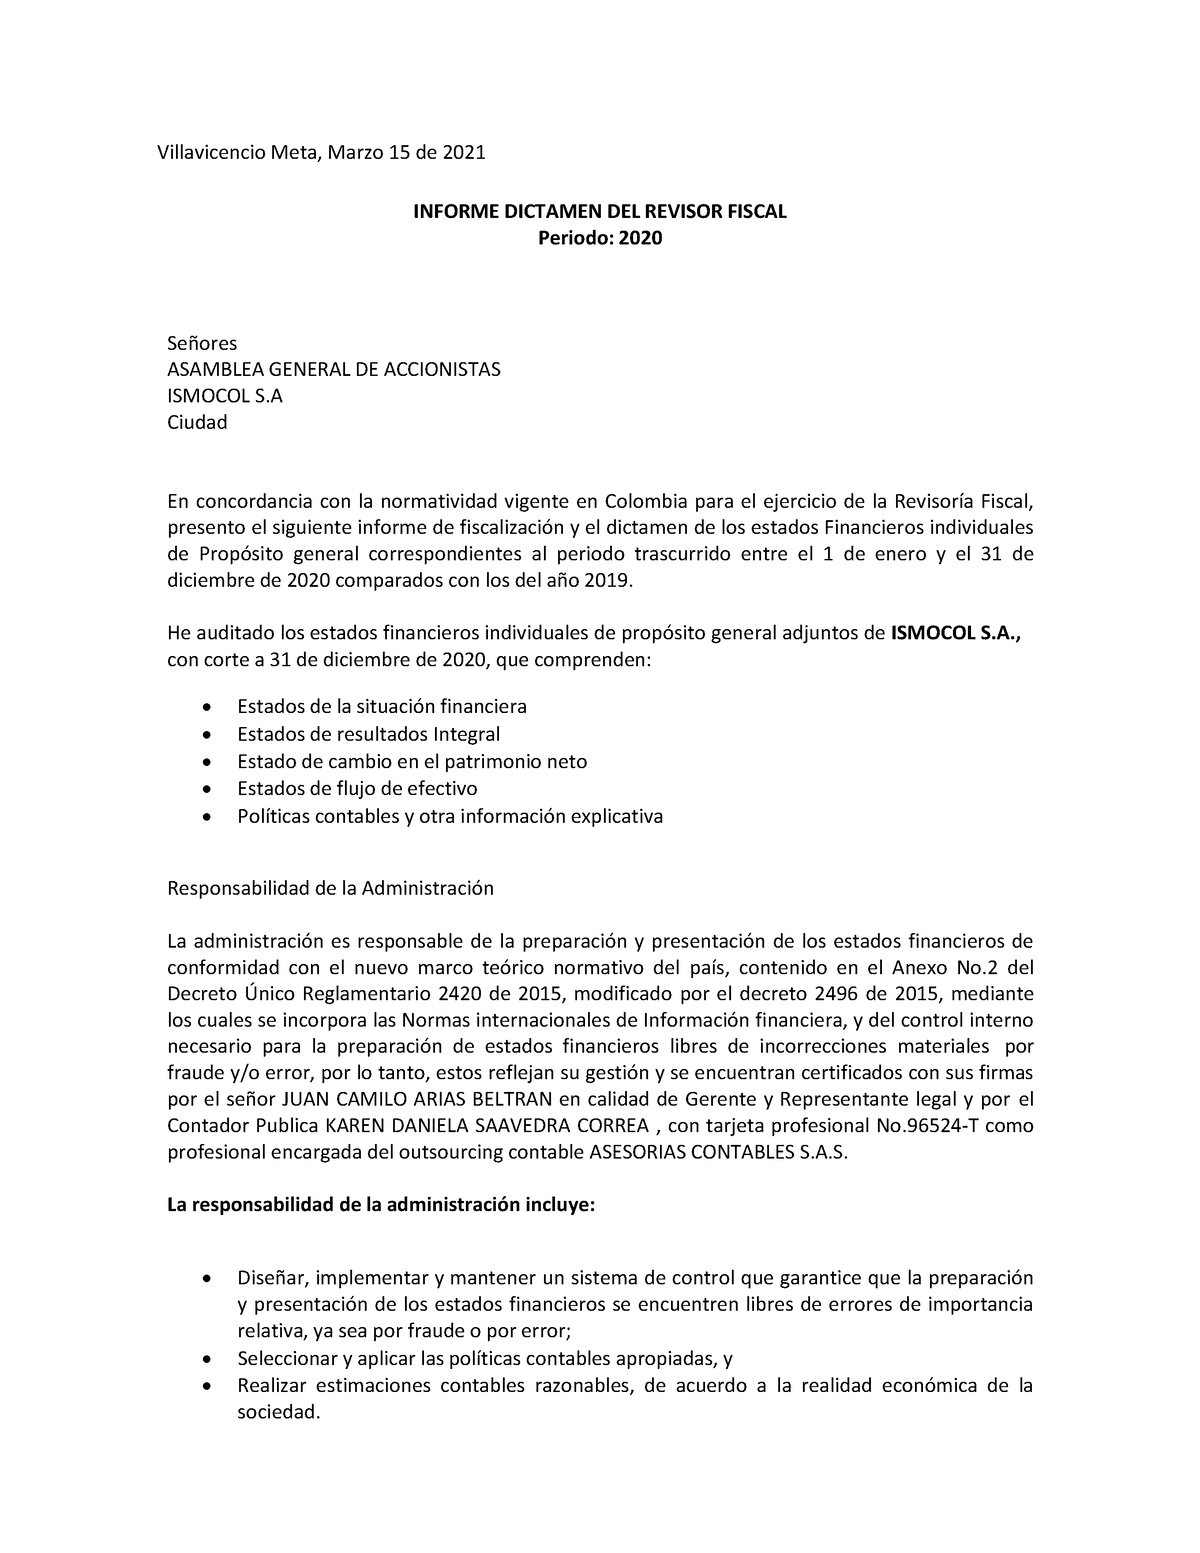 Dictamen De Revisoria Fiscal Villavicencio Meta Marzo 15 De 2021